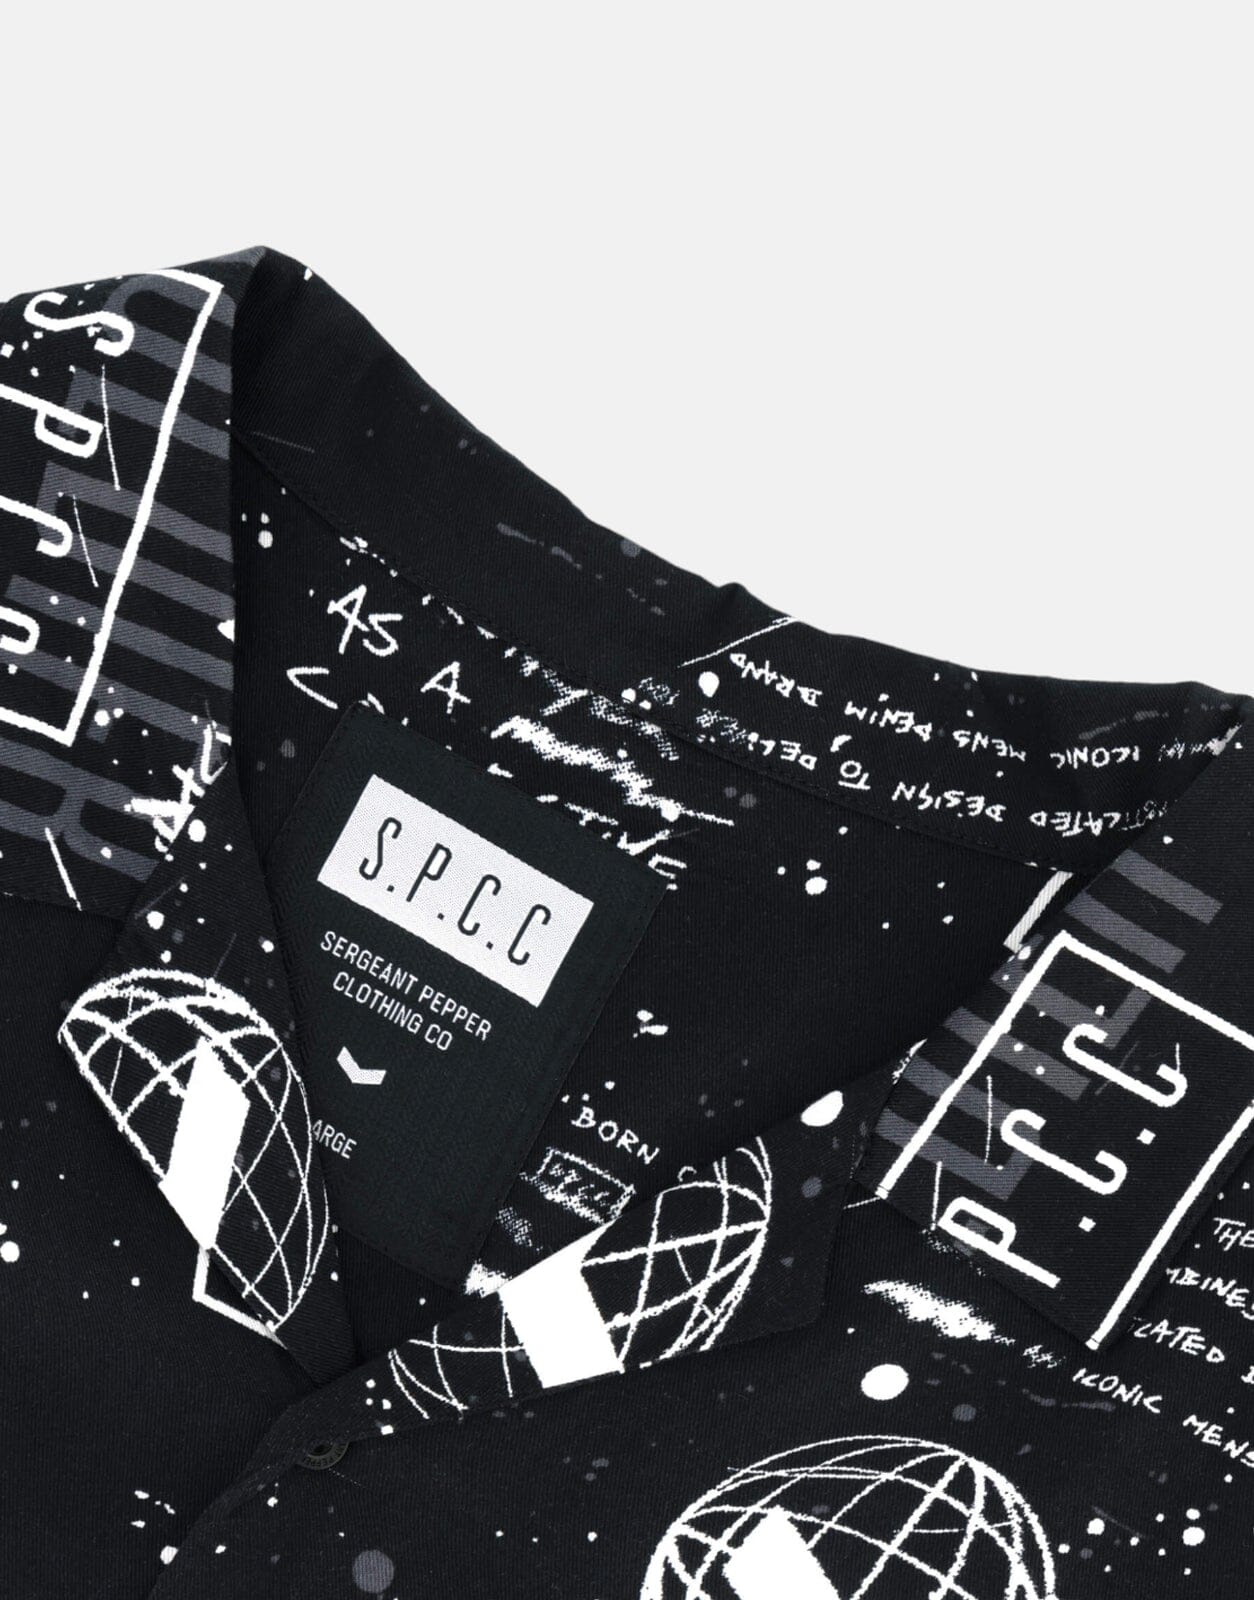 SPCC Kepler Black Shirt - Subwear